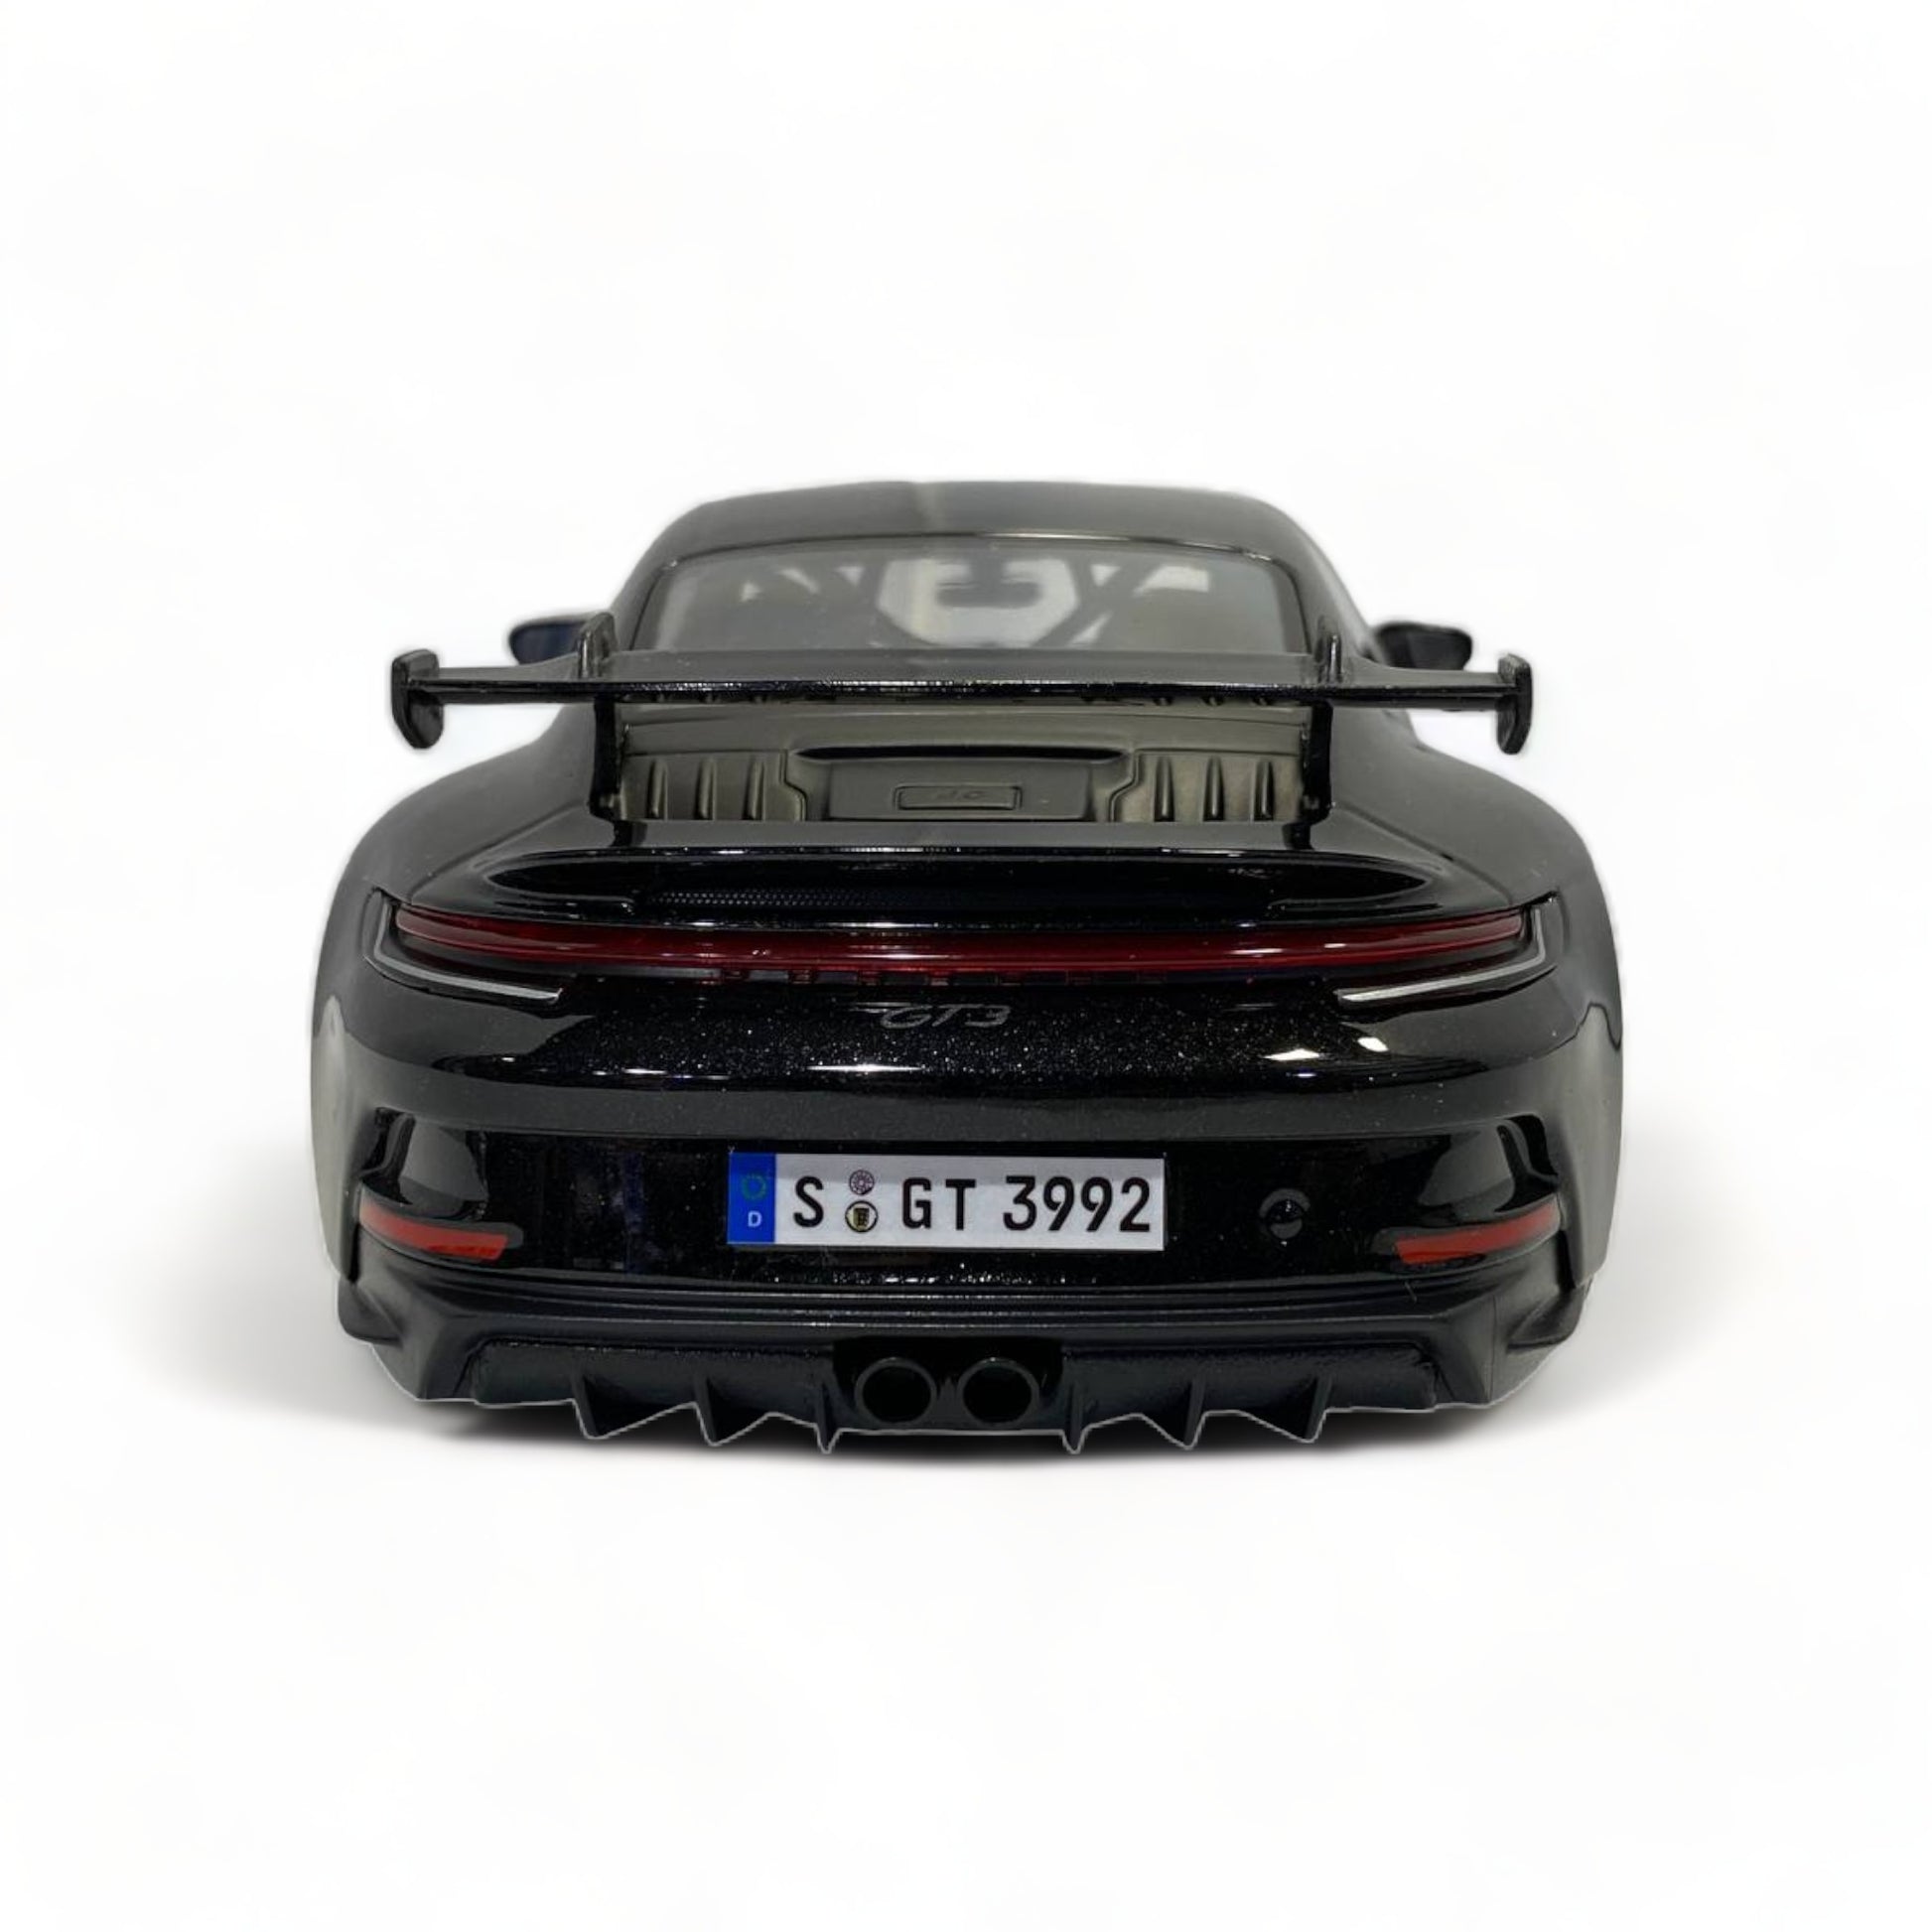 1/18 Porsche 911 GT3 Black Scale Model car by Maisto